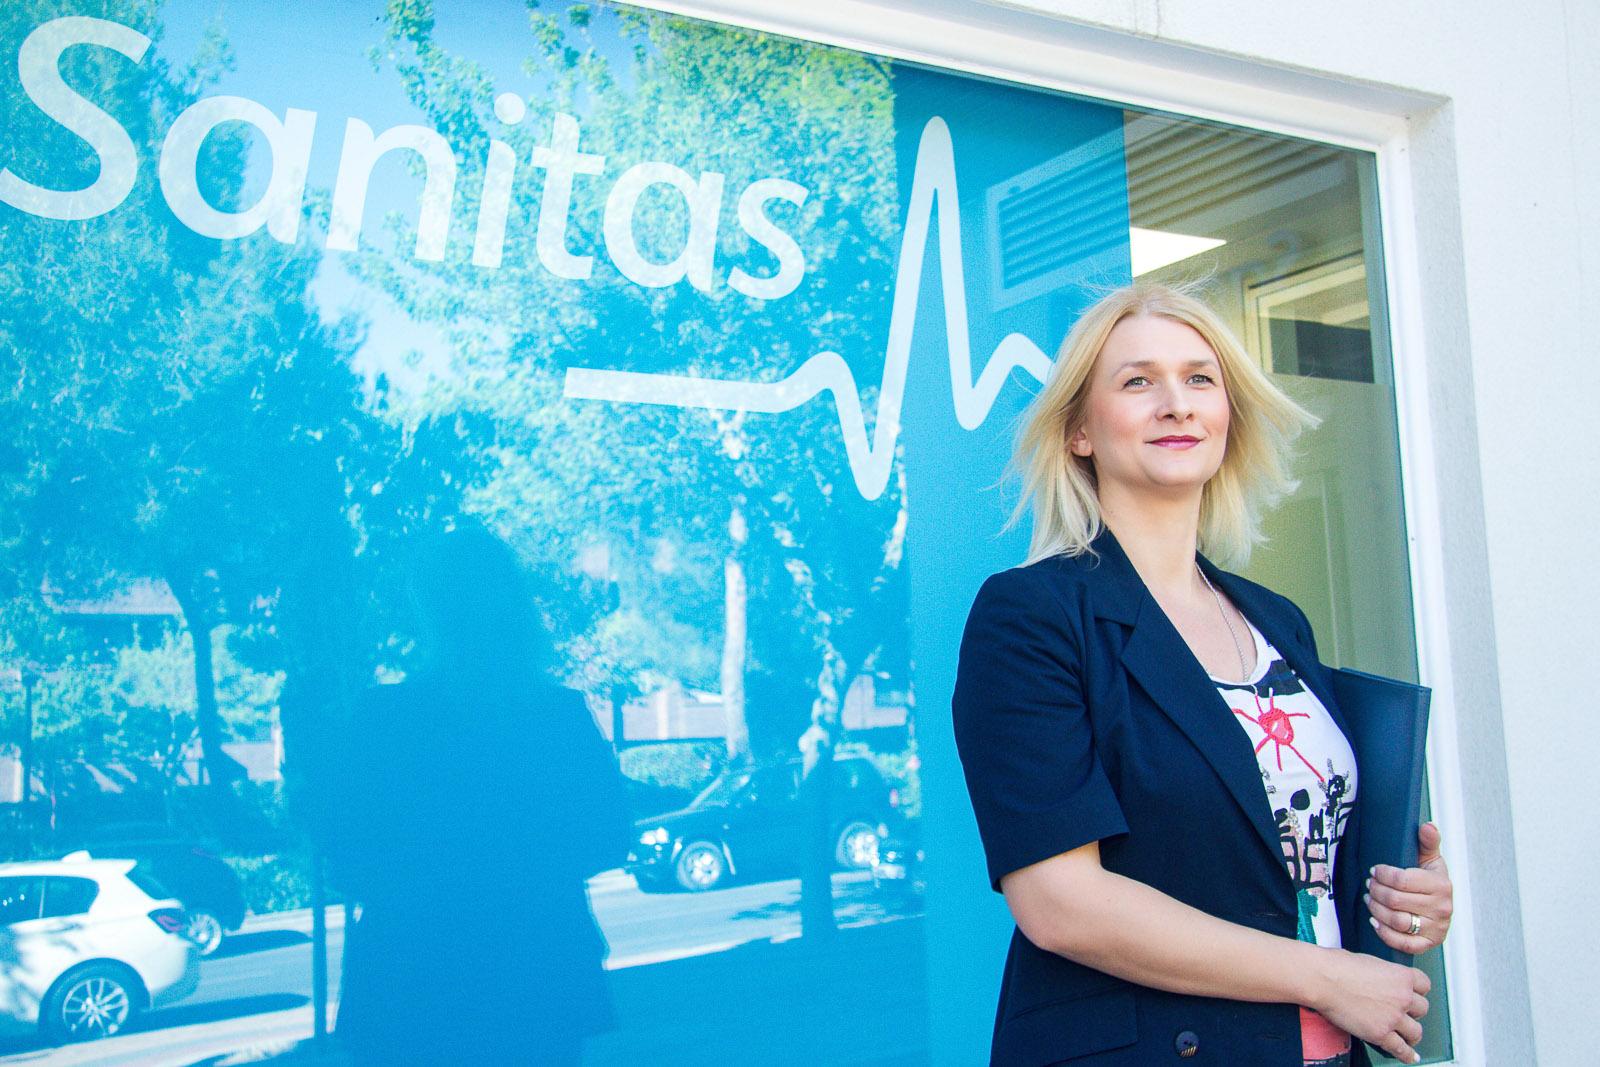 Sanitas health insurance throughout Spain. Sanitas insurance for residence permit, students, - 1